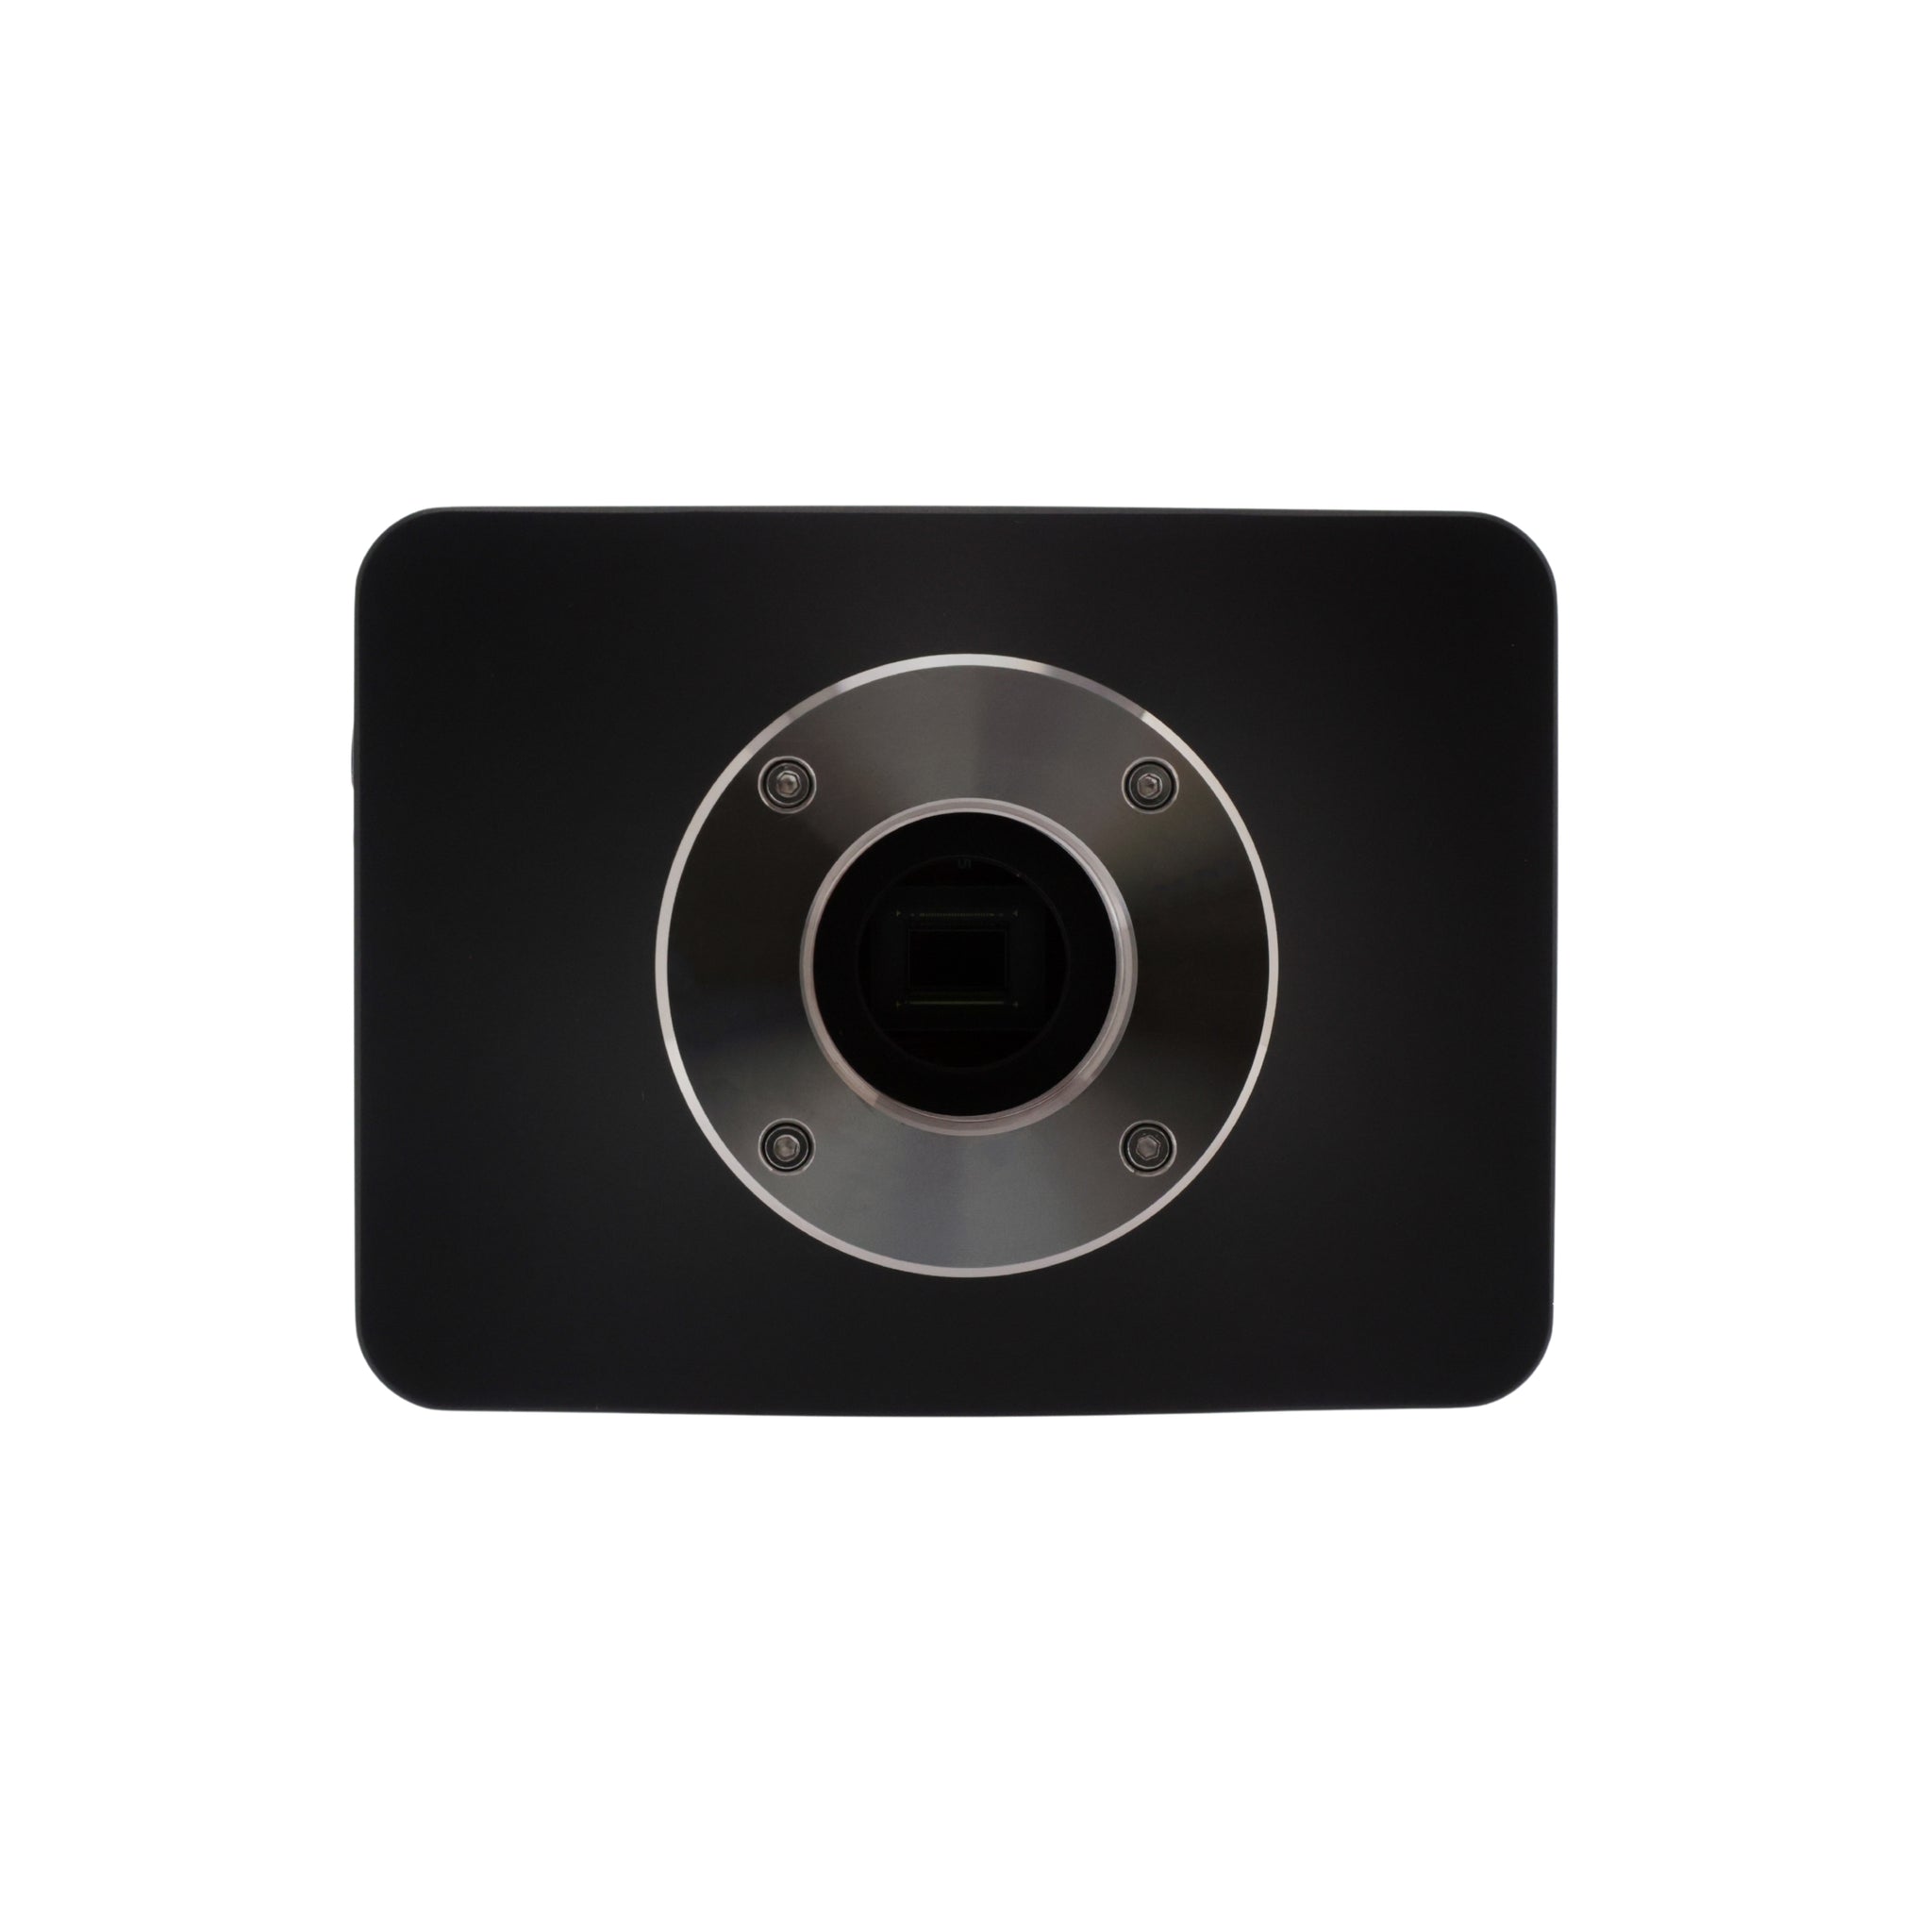 Camara Web Webcam Usb Pc Notebook Microfono Meet Zoom Color Negro